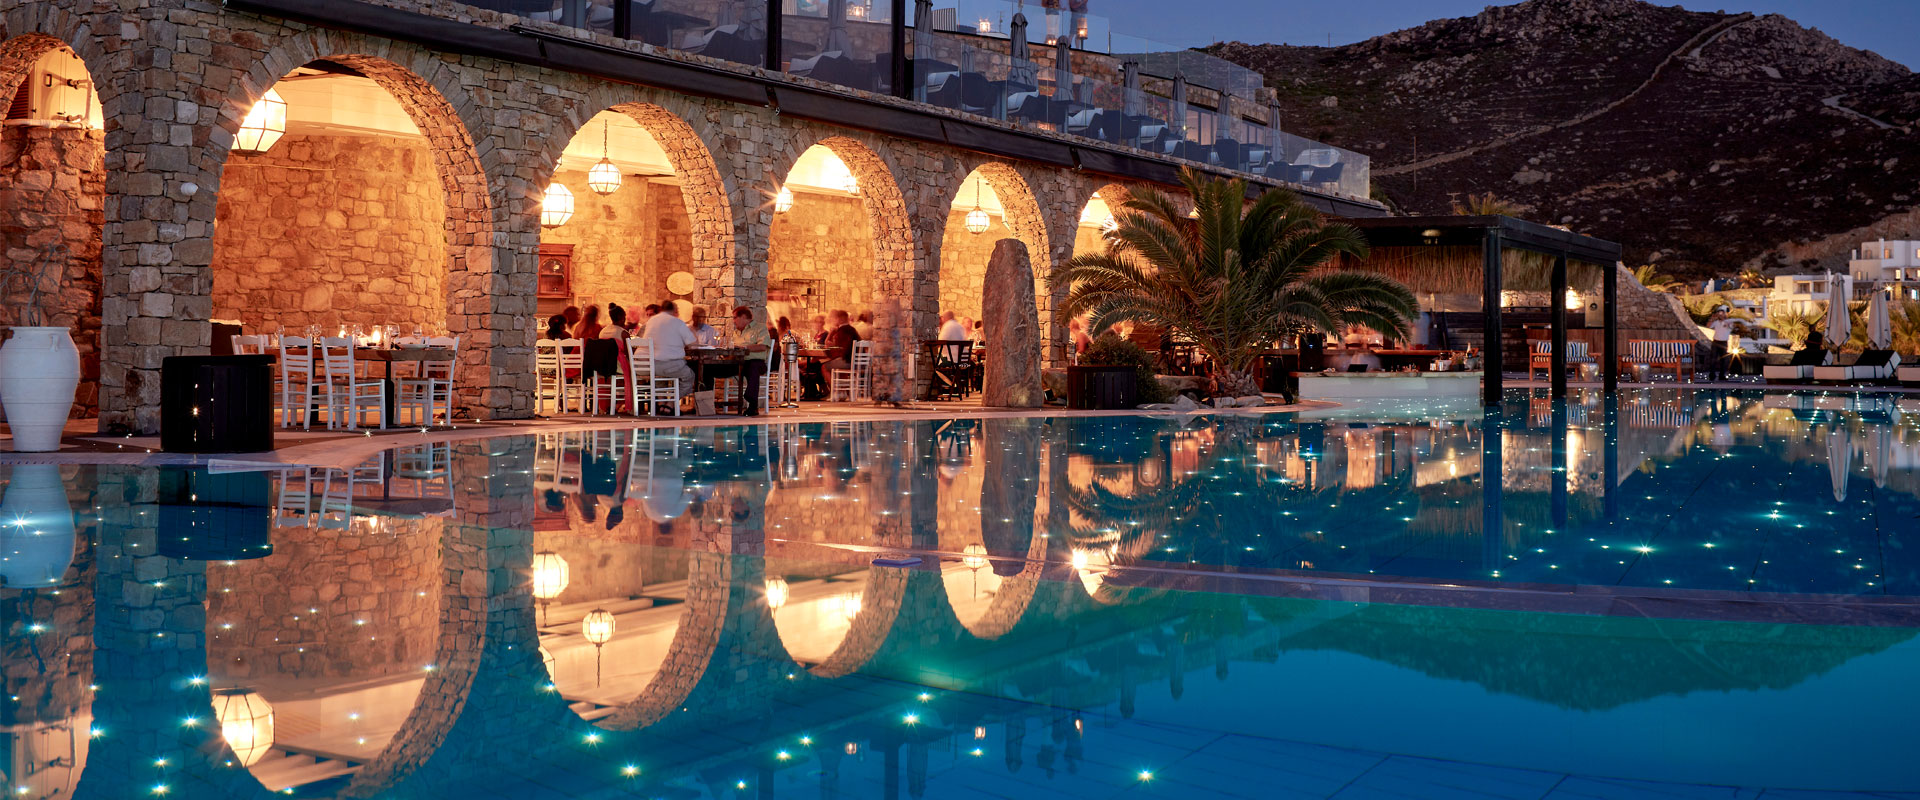 Royal Myconian Hotel Mykonos Greece 3